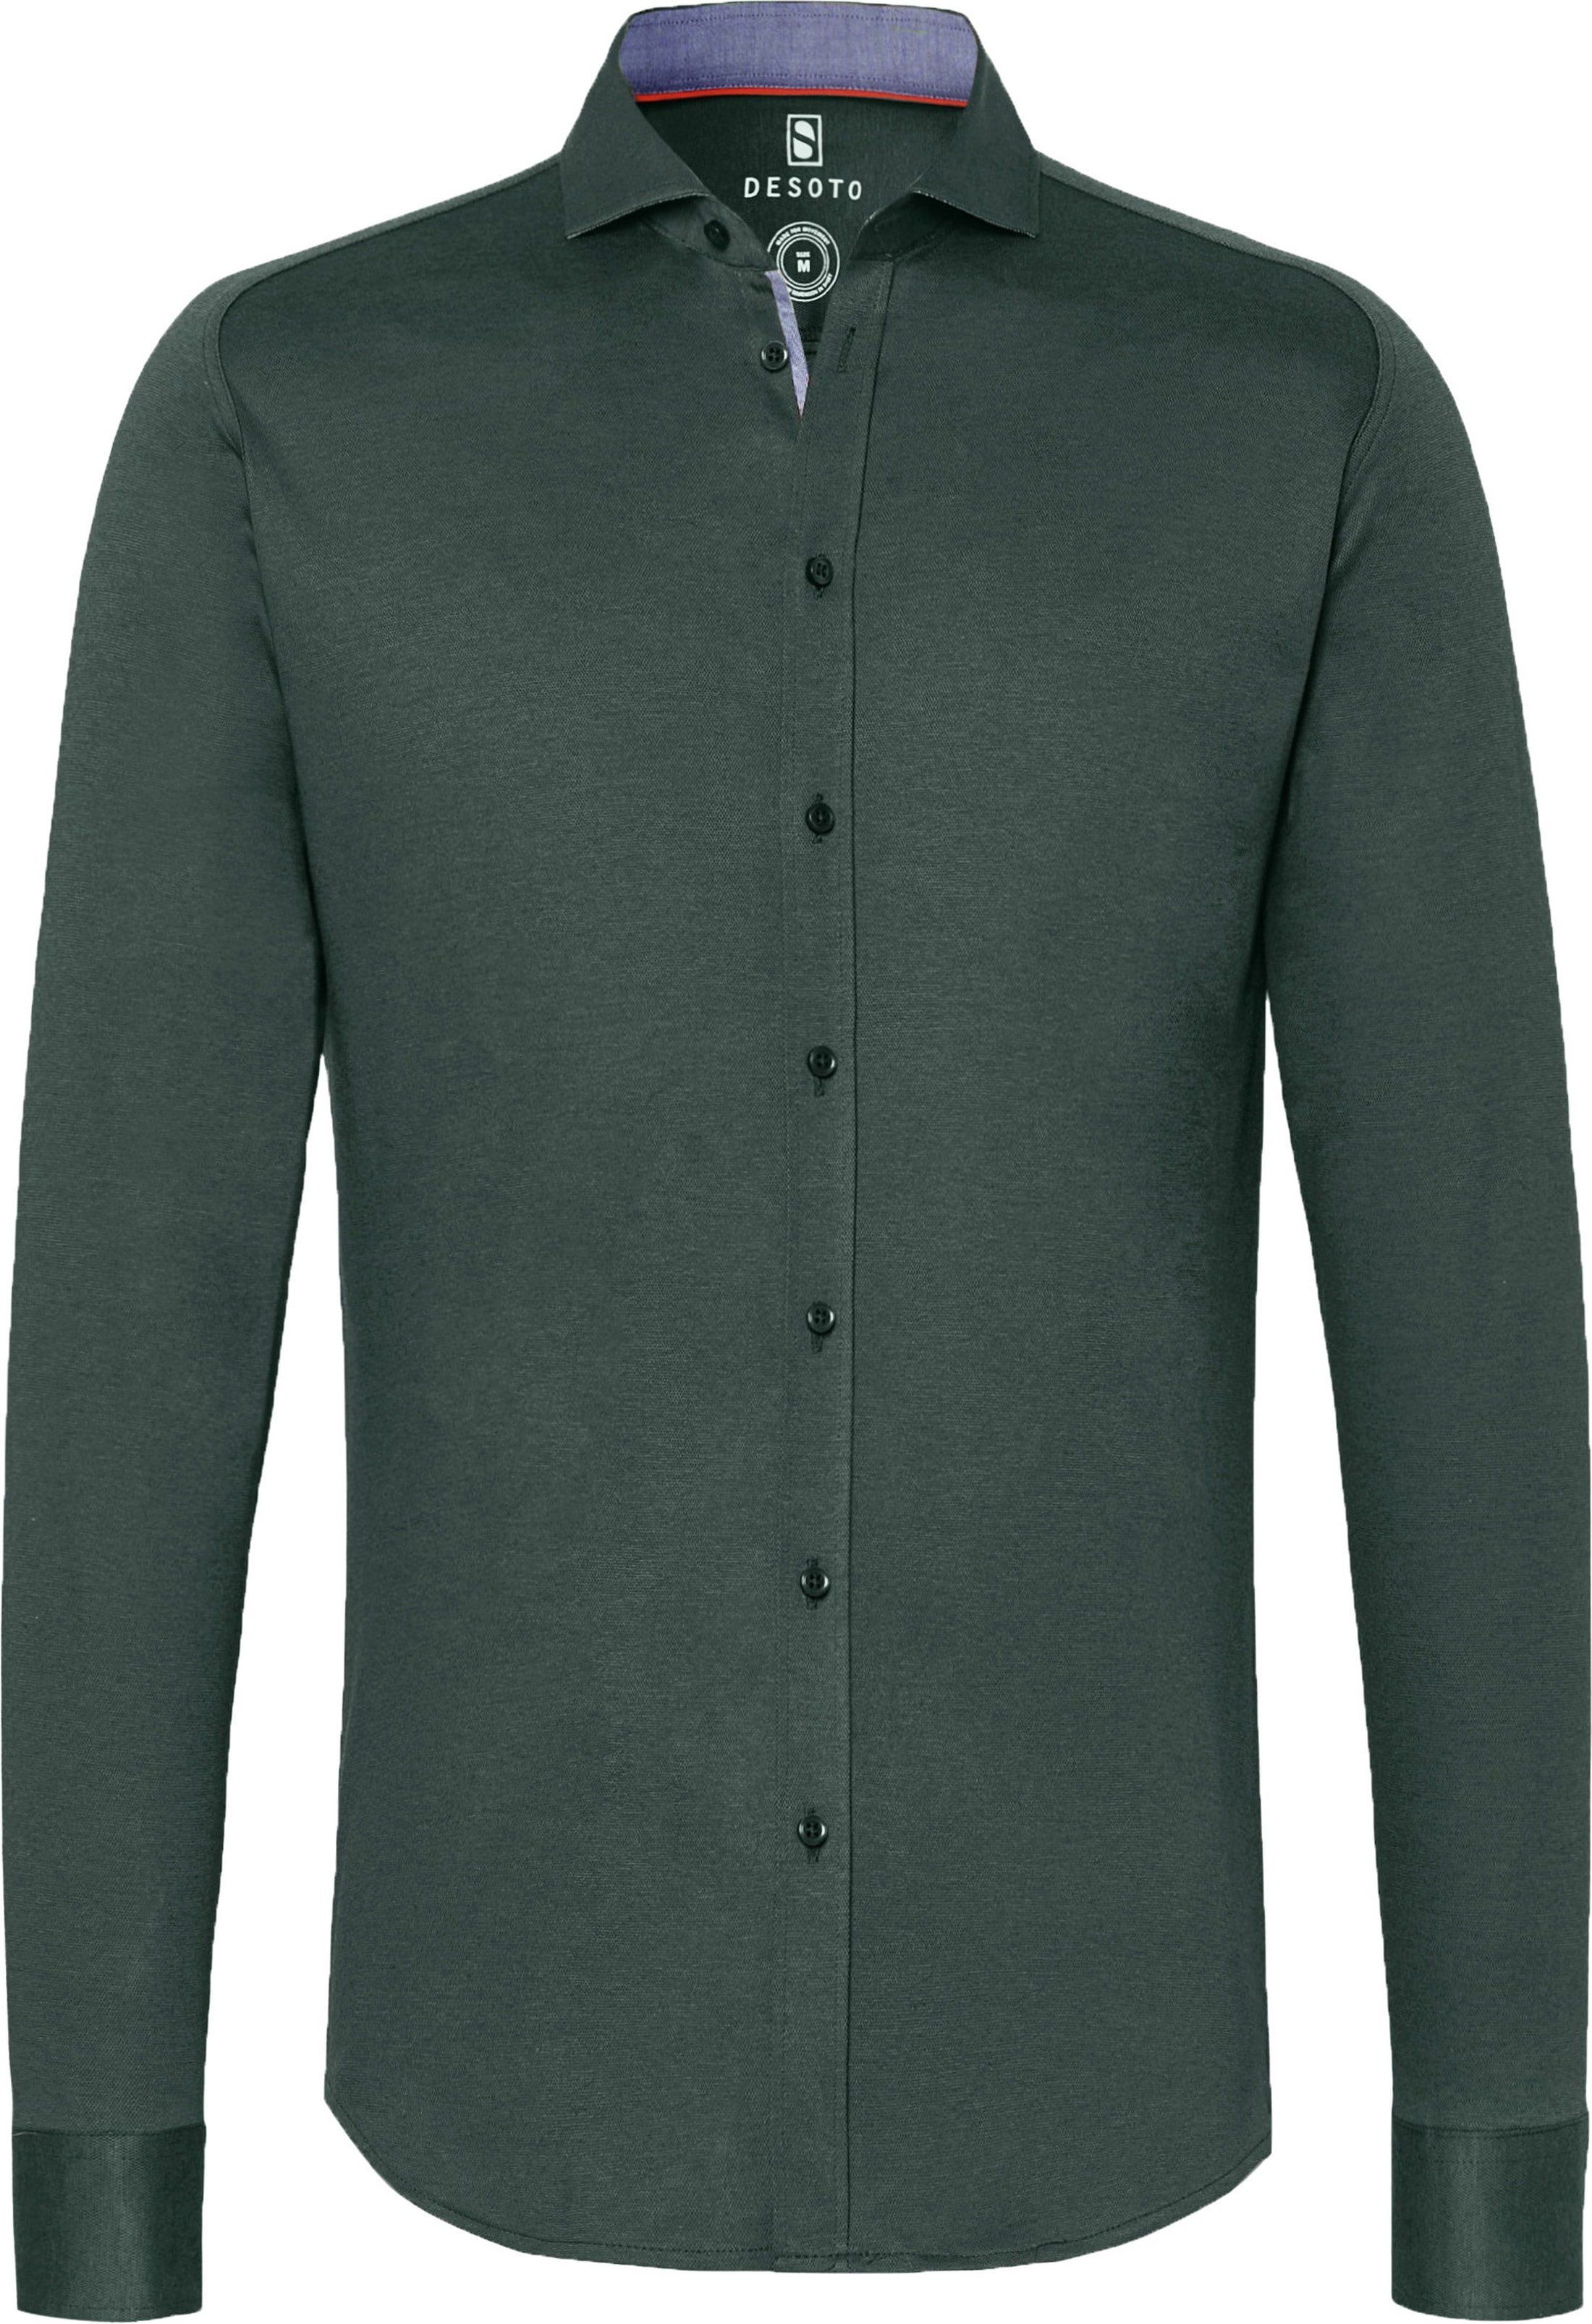 Desoto Shirt Non Iron Dark 602 Dark Green Green size 3XL